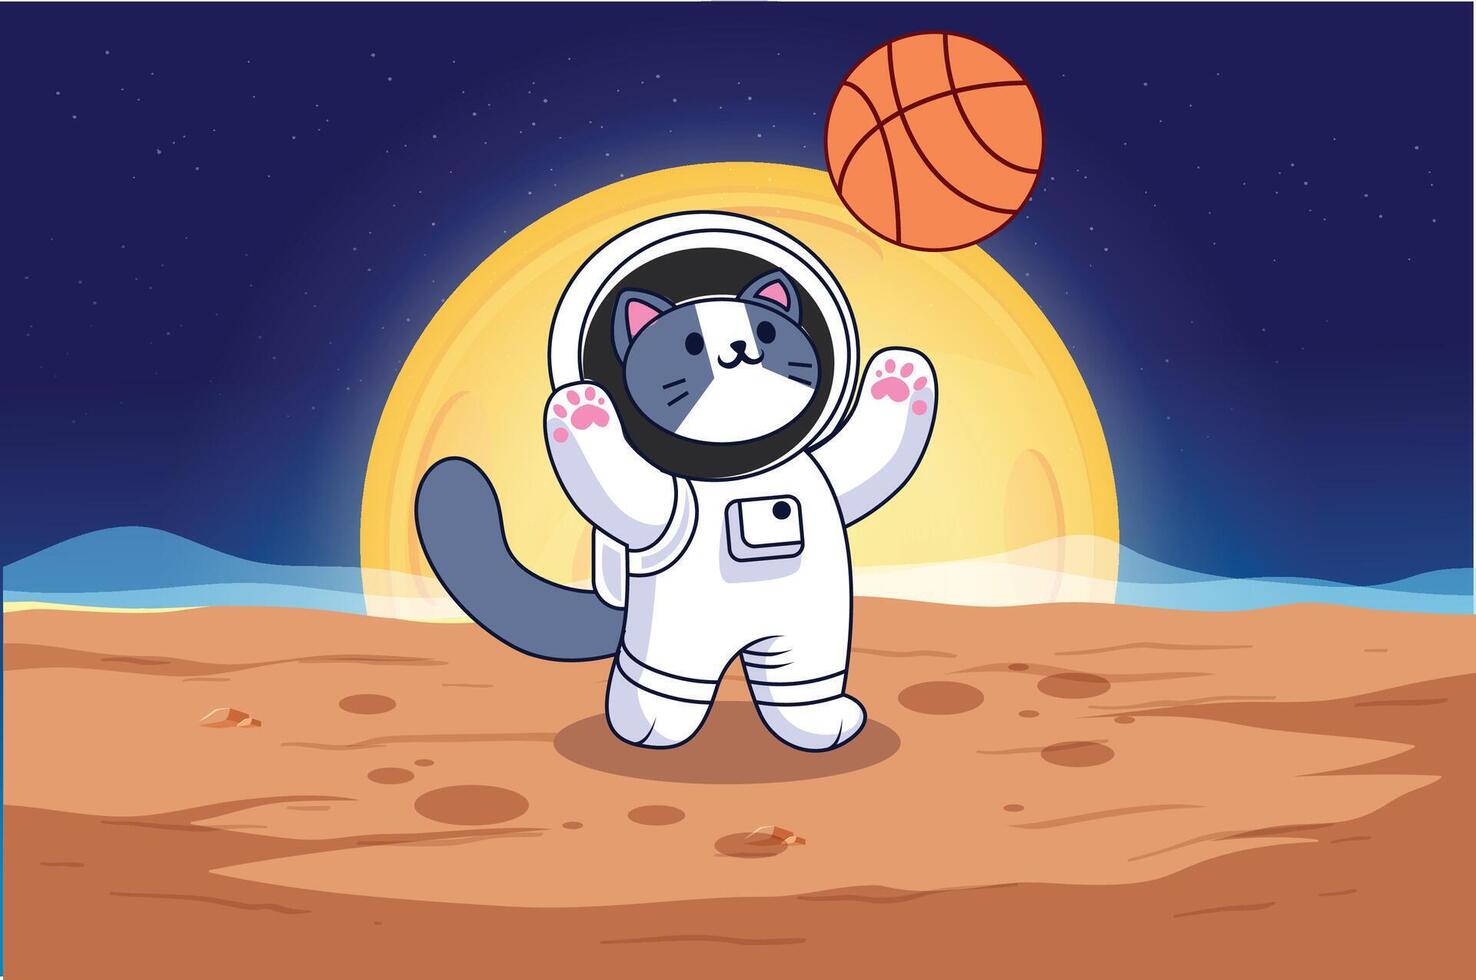 linda gato jugando baloncesto en exterior espacio planeta con baloncesto polo dibujos animados vector icono ilustración, estafa concepto aislado prima vector. adecuado para infografia y libro imagen ilustración